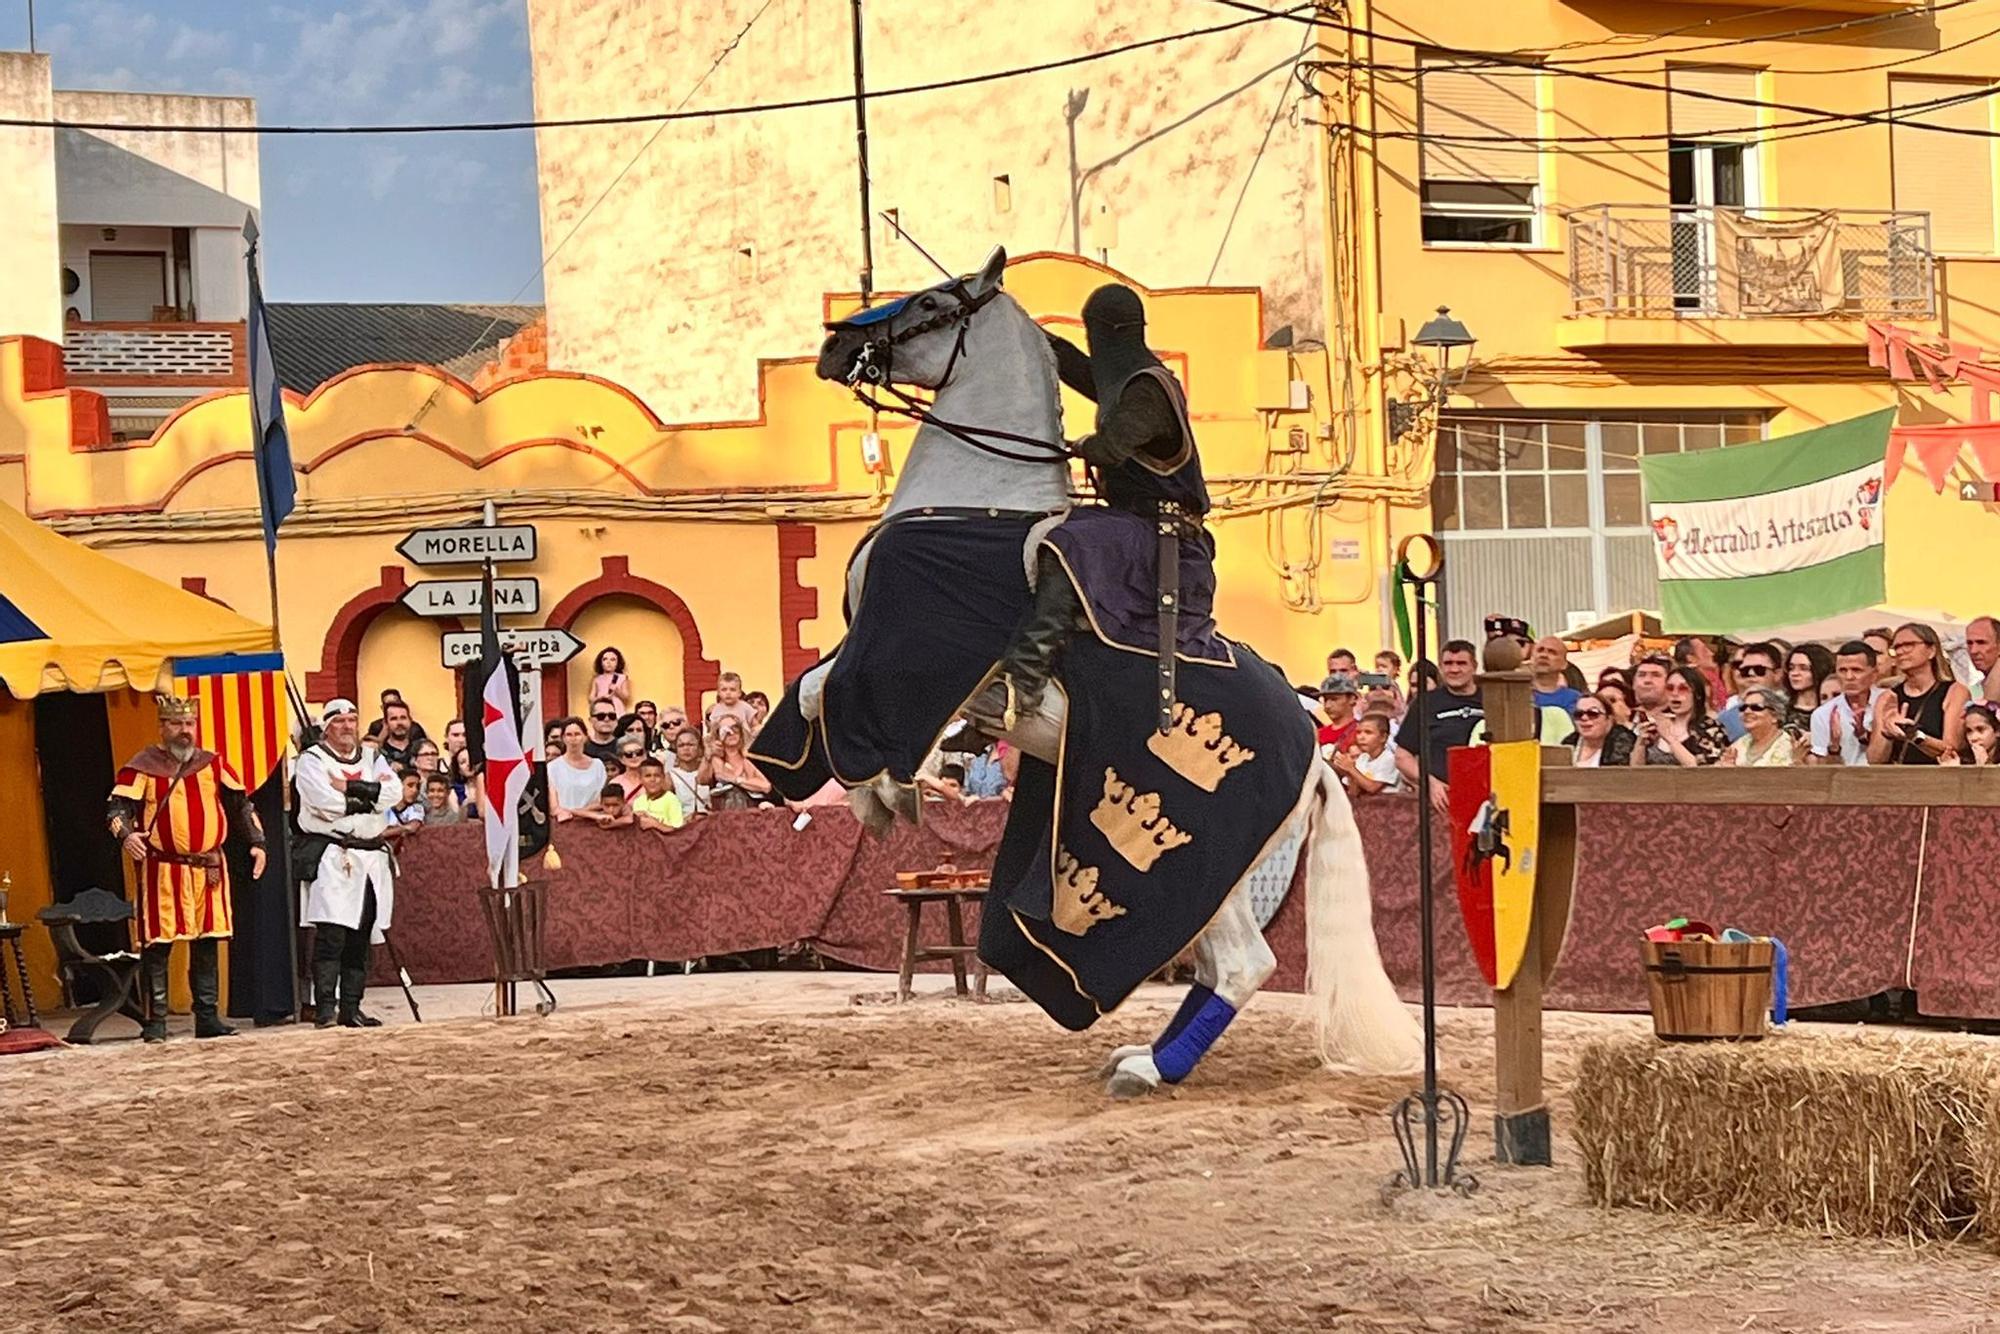 Épicas fotos de combate en el último día de Sant Mateu Medieval